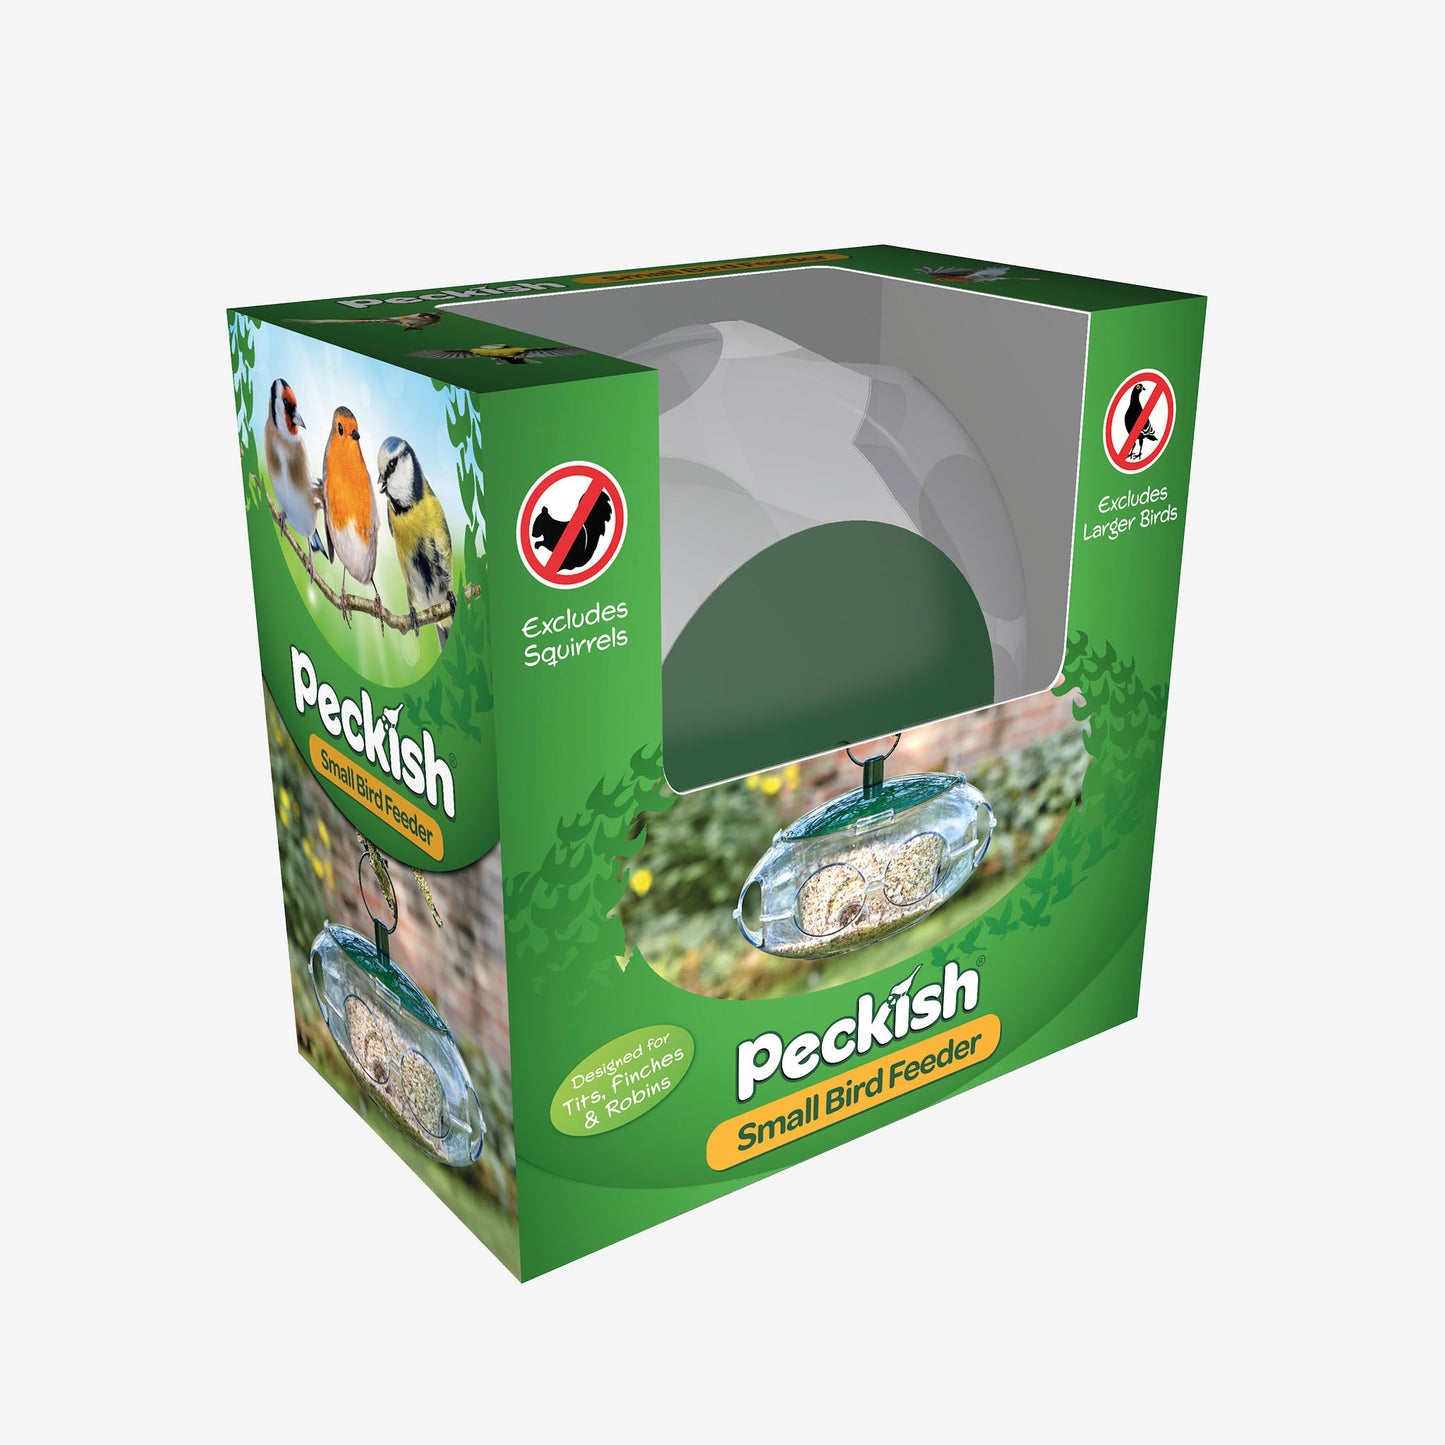 Peckish Small Bird Feeder in packaging box